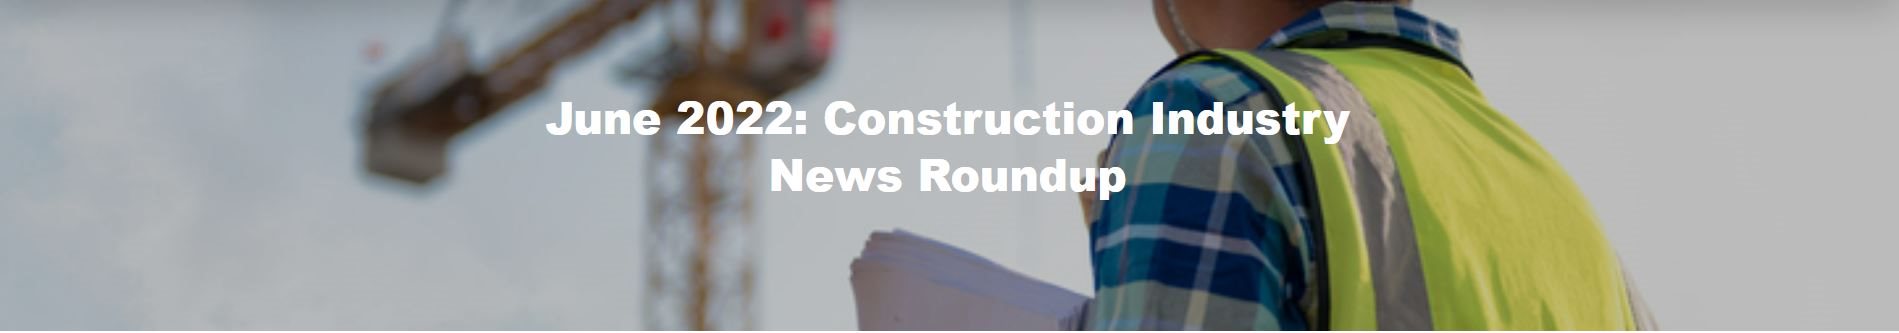 June 2022: Construction Industry News Roundup